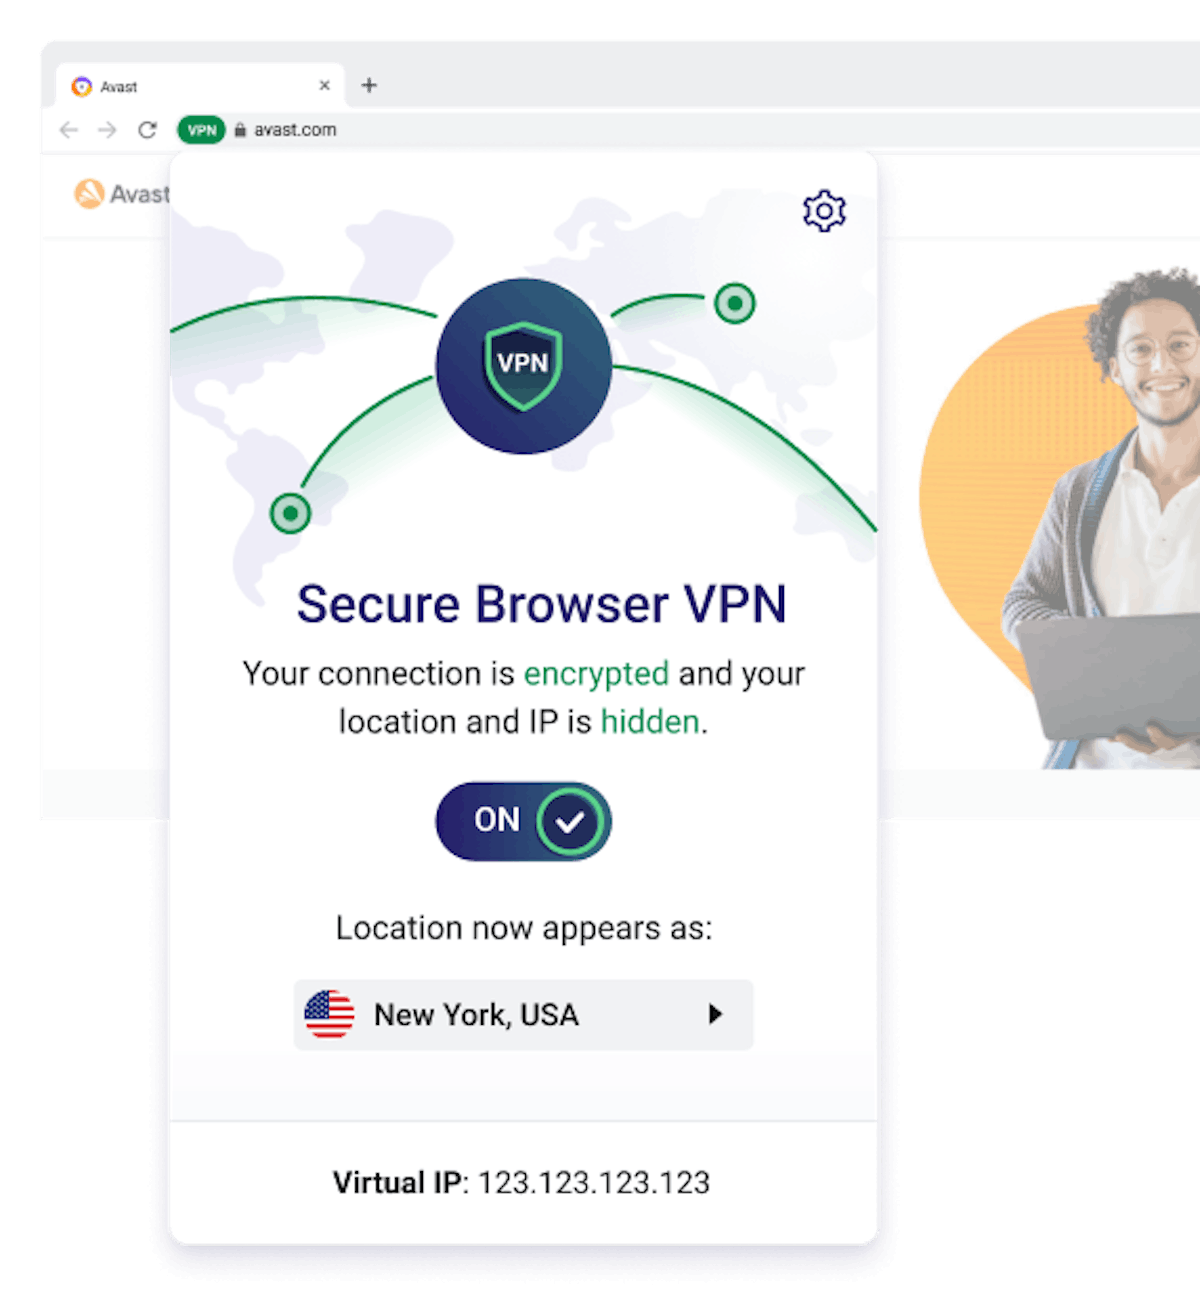 Secure Browser VPN powered by ultrafast Mimic VPN engine